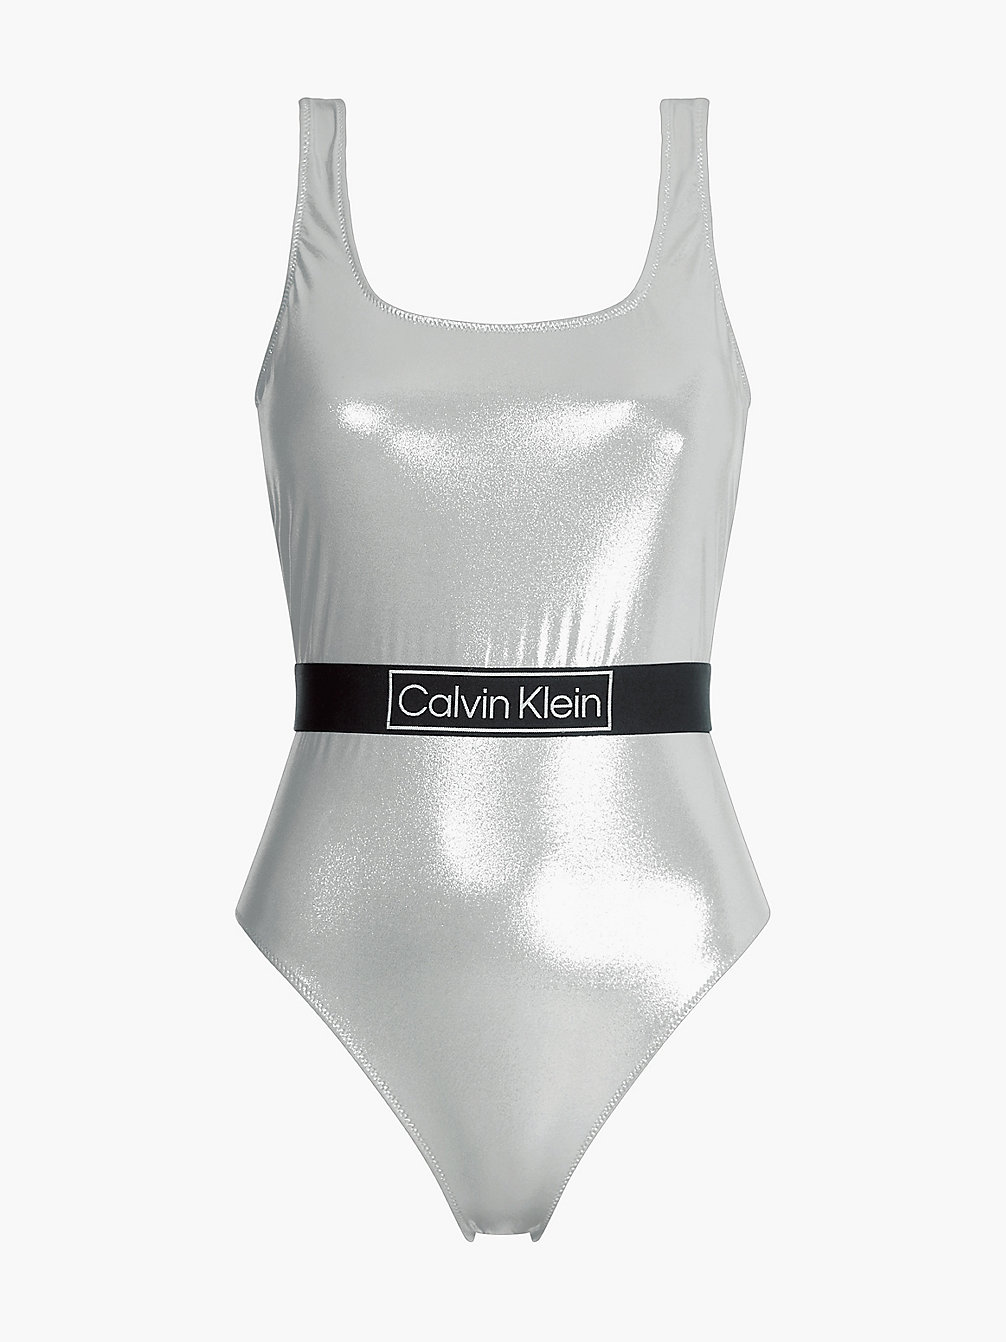 LIGHT CAST > Слитный купальник с декольте - Core Festive > undefined Женщины - Calvin Klein